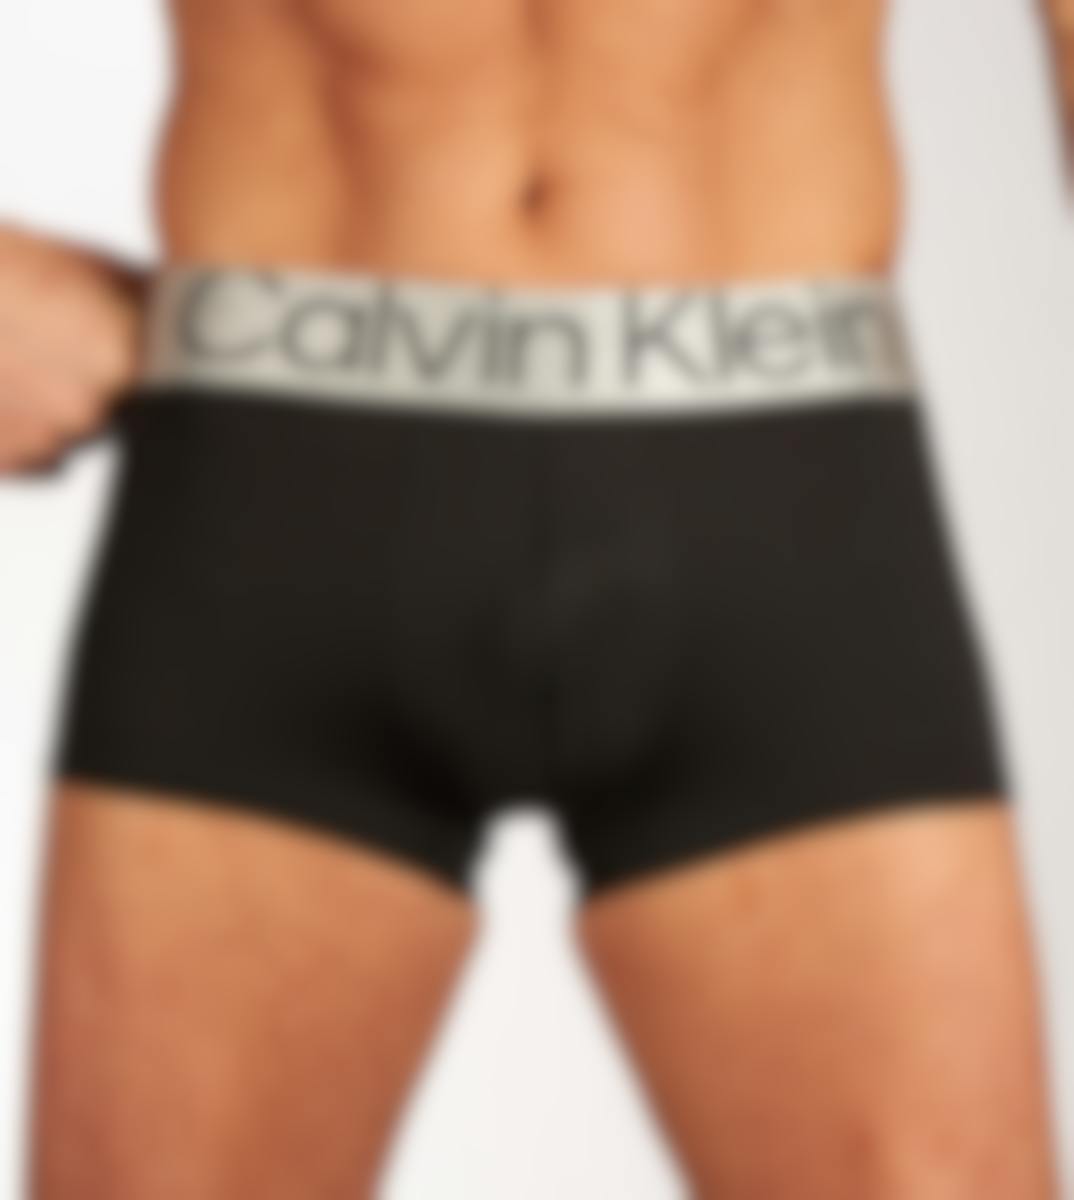 Calvin Klein short 3 pack Low Rise Trunk H